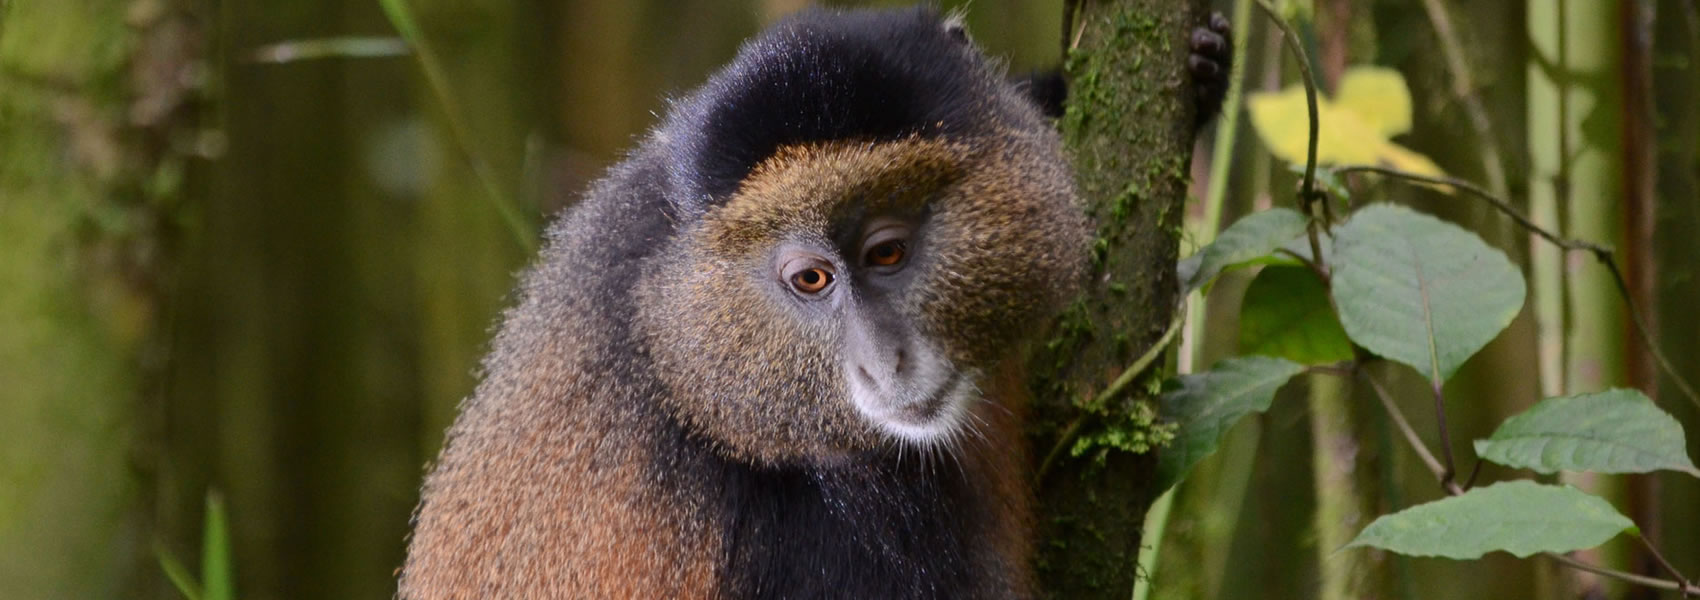 16days-uganda-primate-gameandcultural-tour